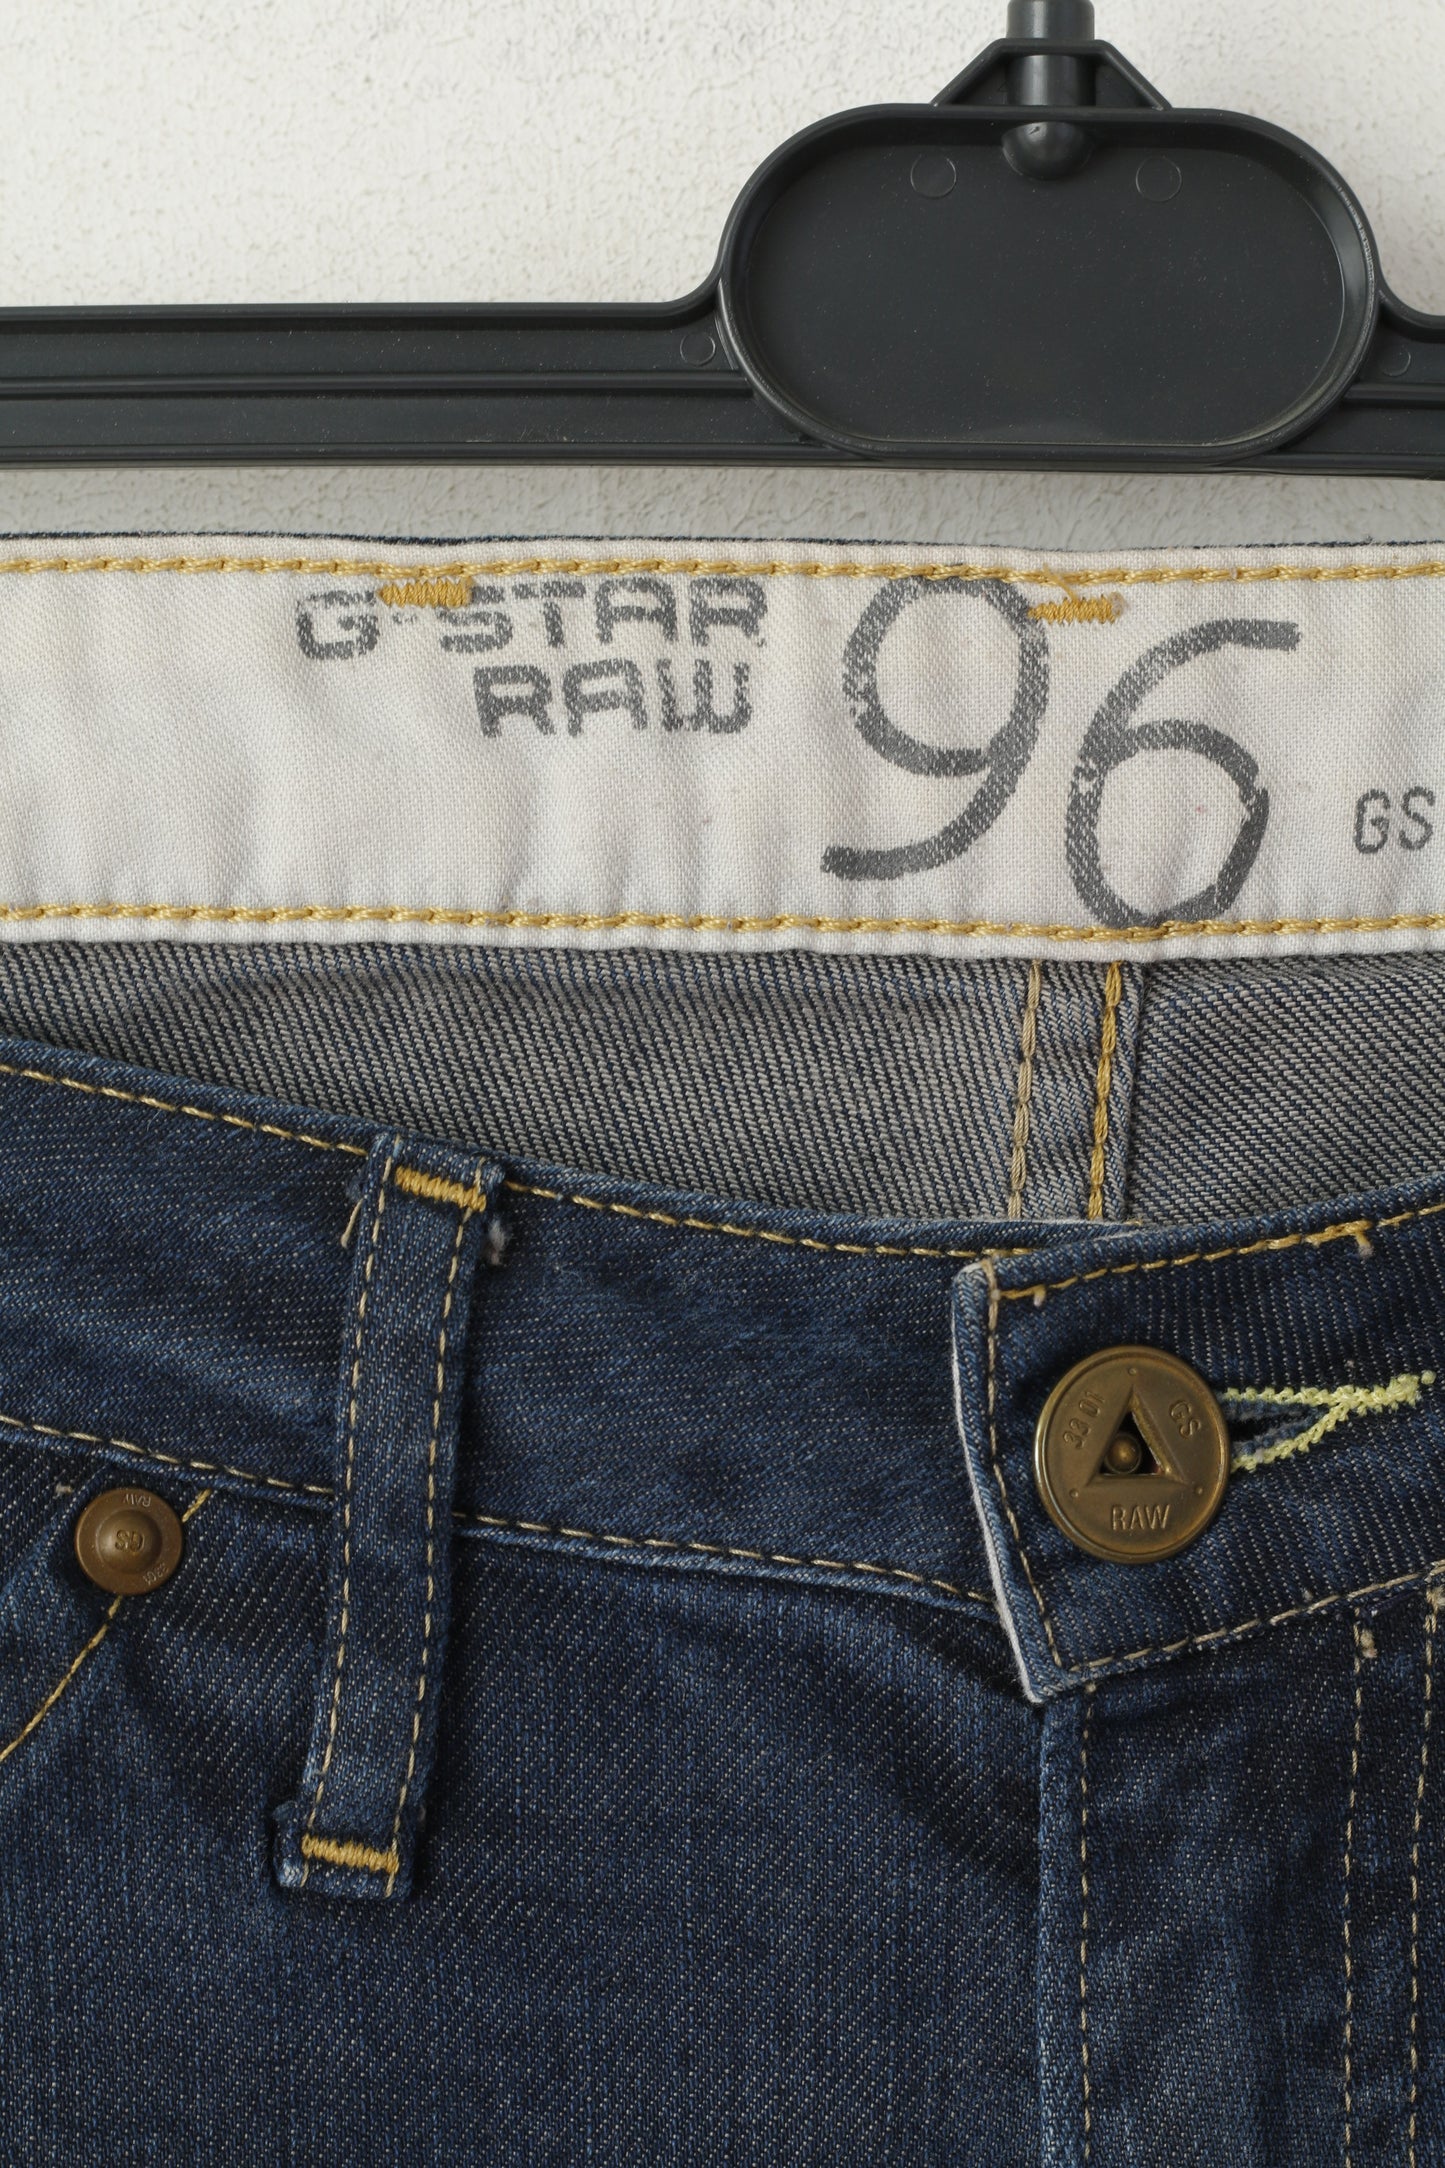 G-STAR Denim Women 29 Trousers Navy Denim Tapered Skinny Jeans Pants